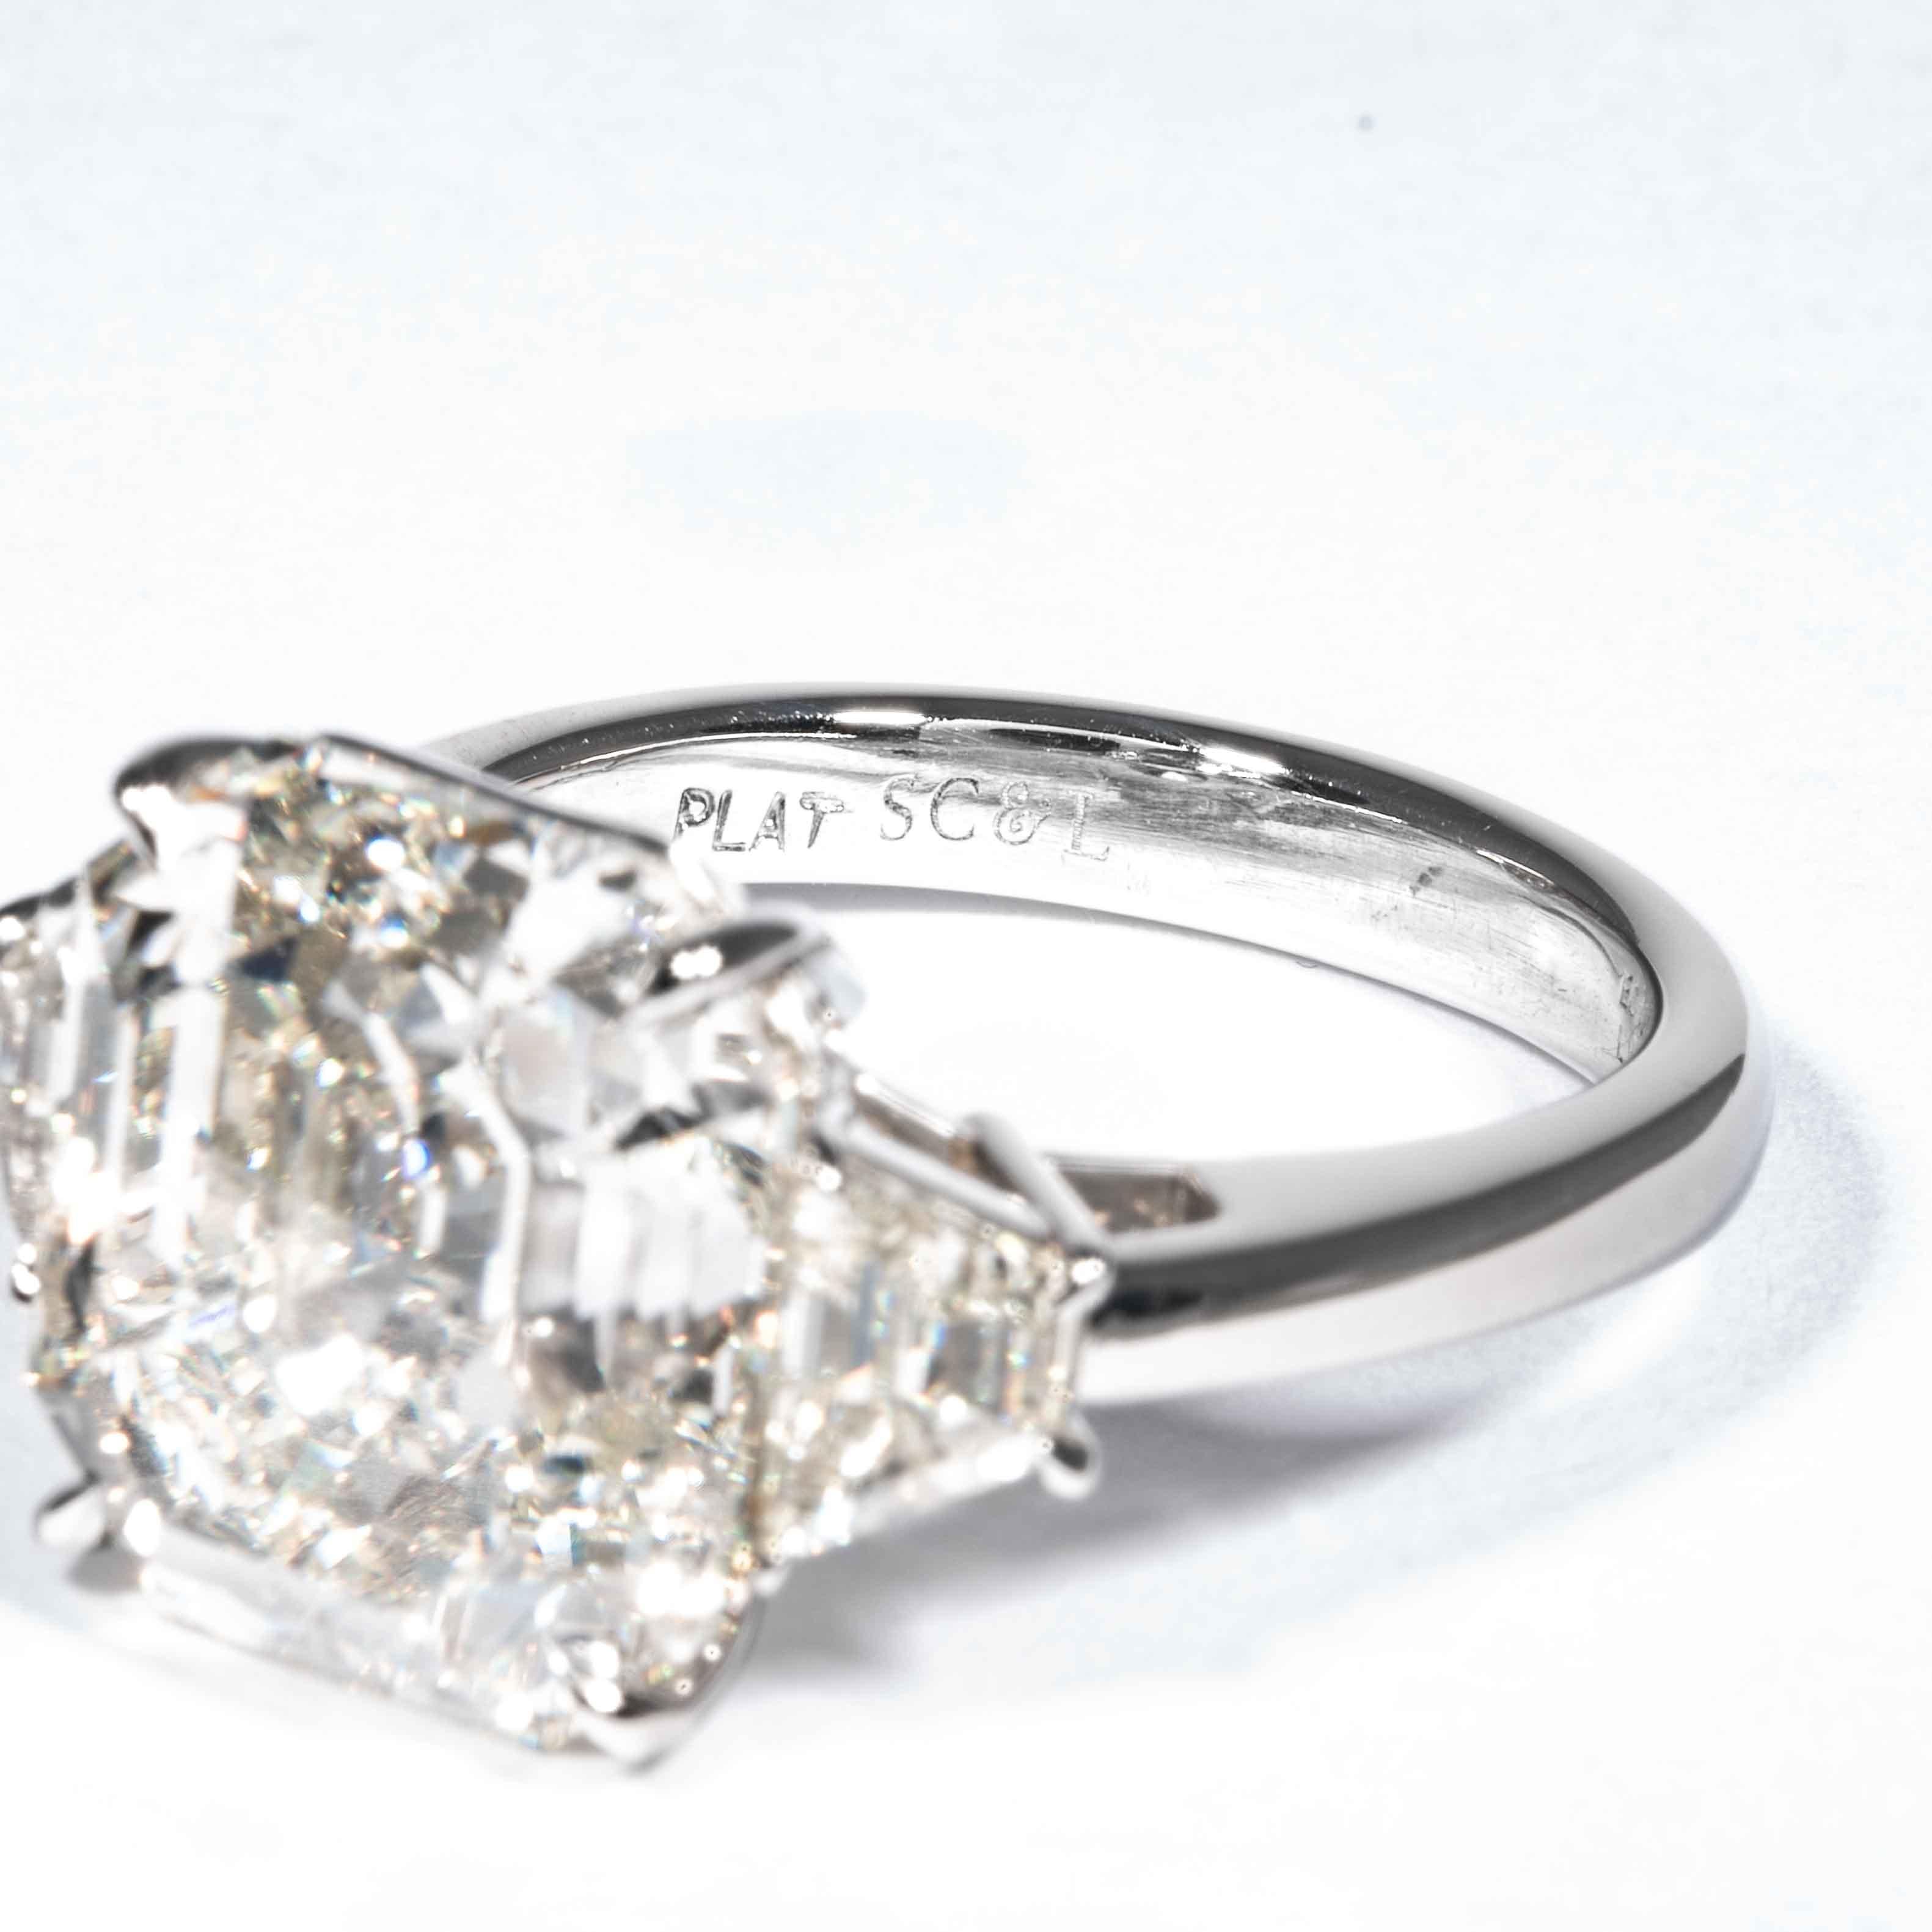 Shreve, Crump & Low GIA Certified 10.04 Carat L VS1 Asscher Cut Diamond Ring 2